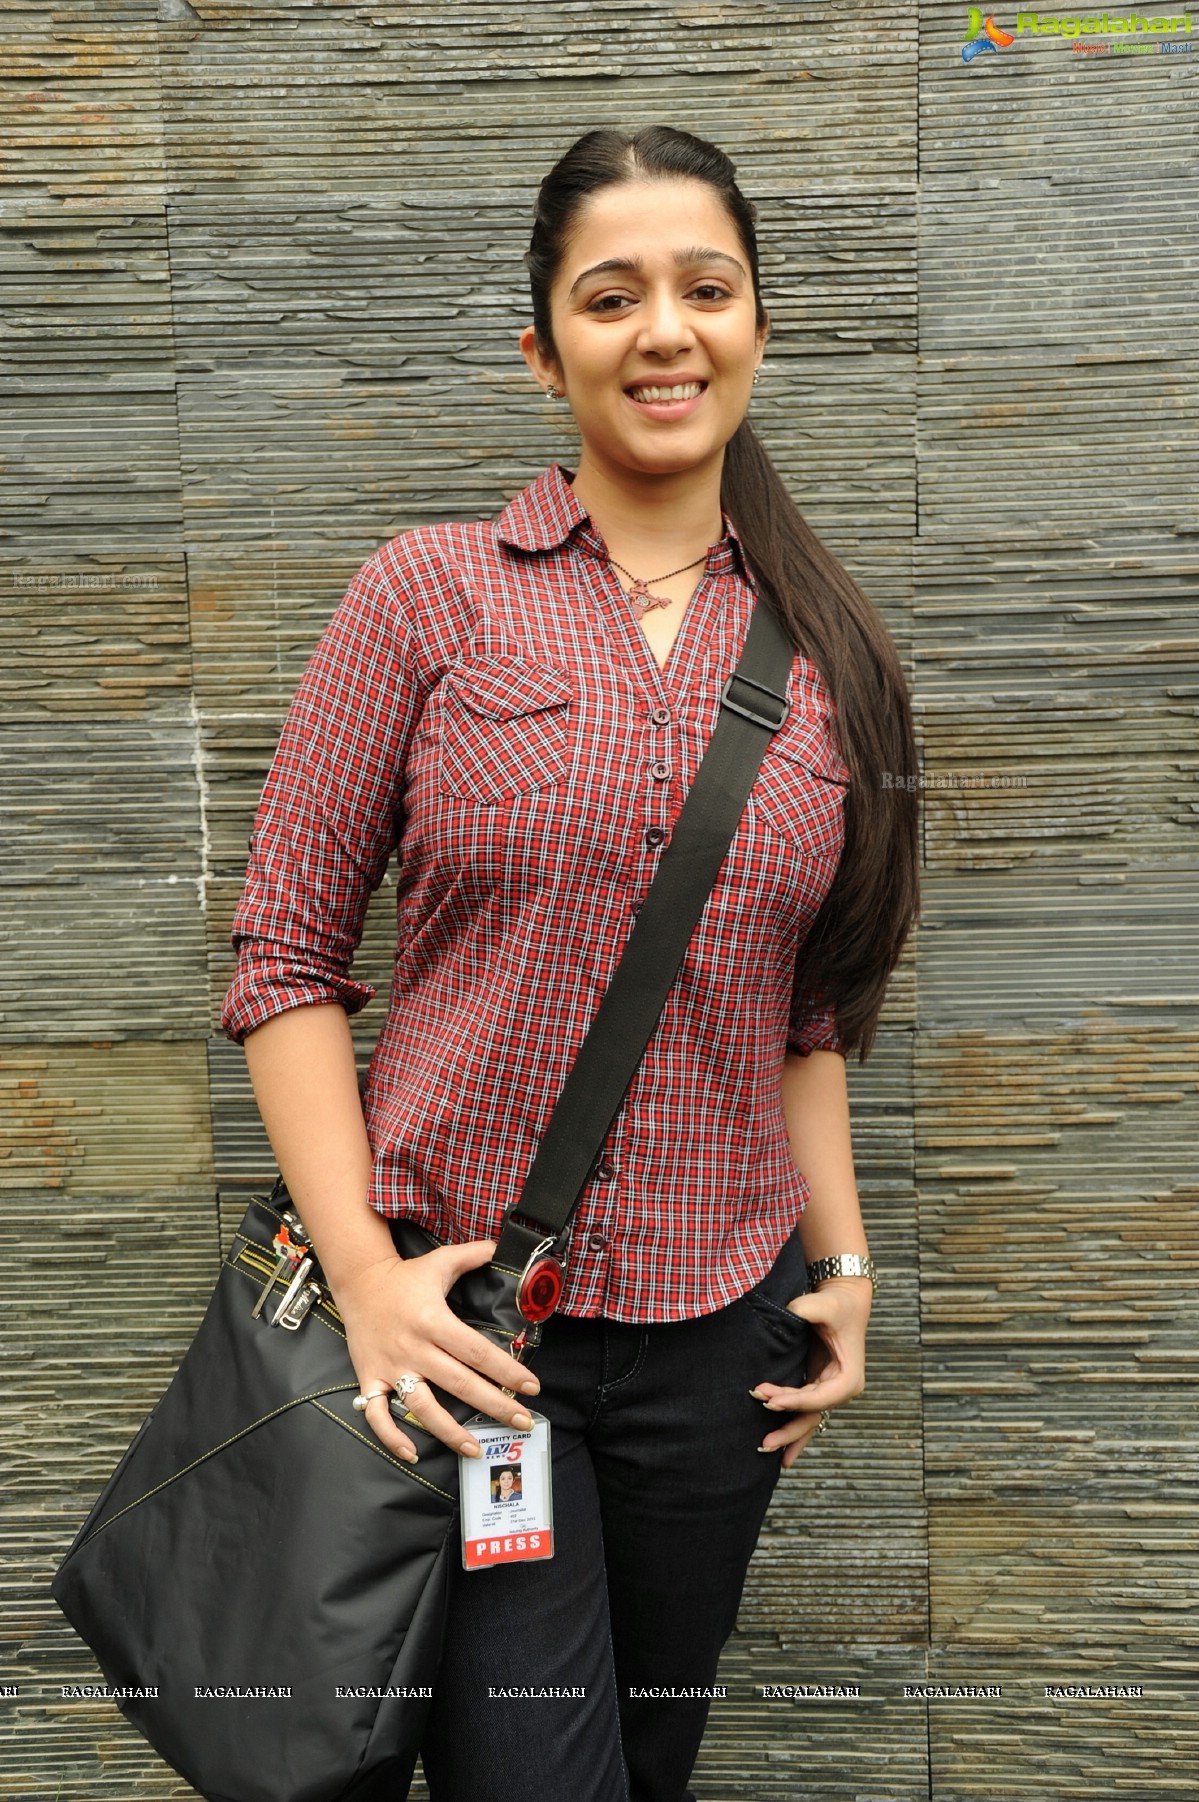 Charmi as TV5 Journalist in Prathighatana, Exclusive Photos